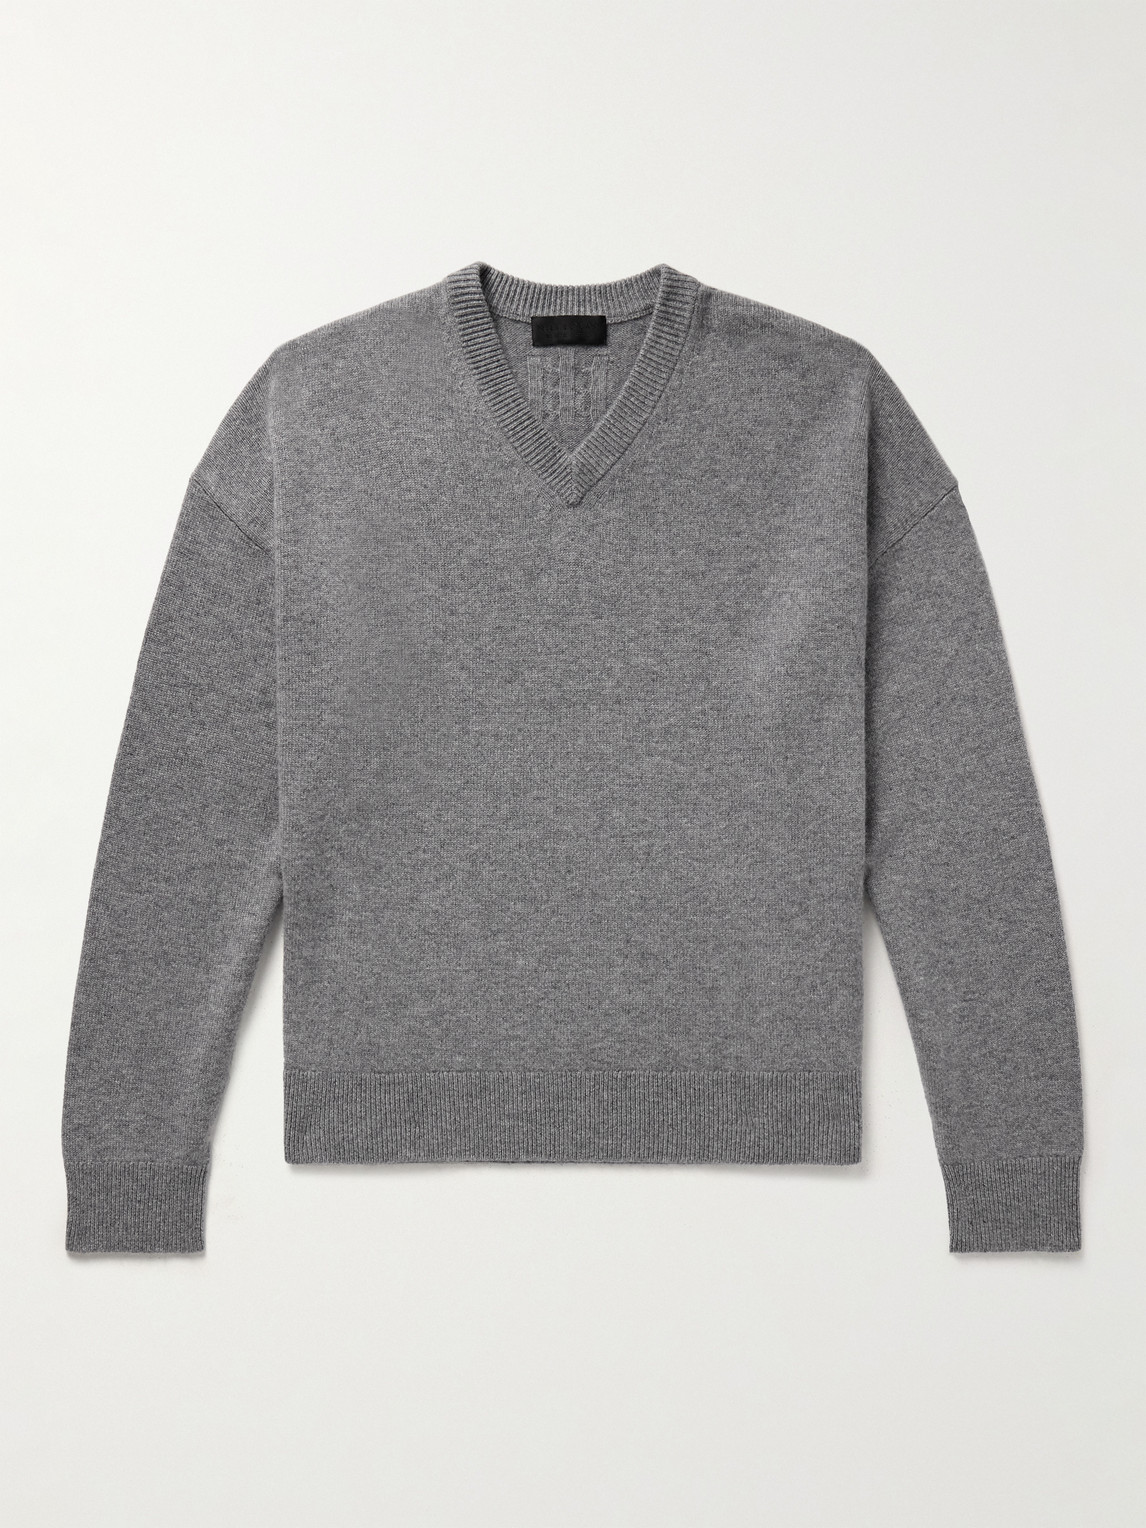 Nili Lotan Hagen Cashmere Sweater In Gray